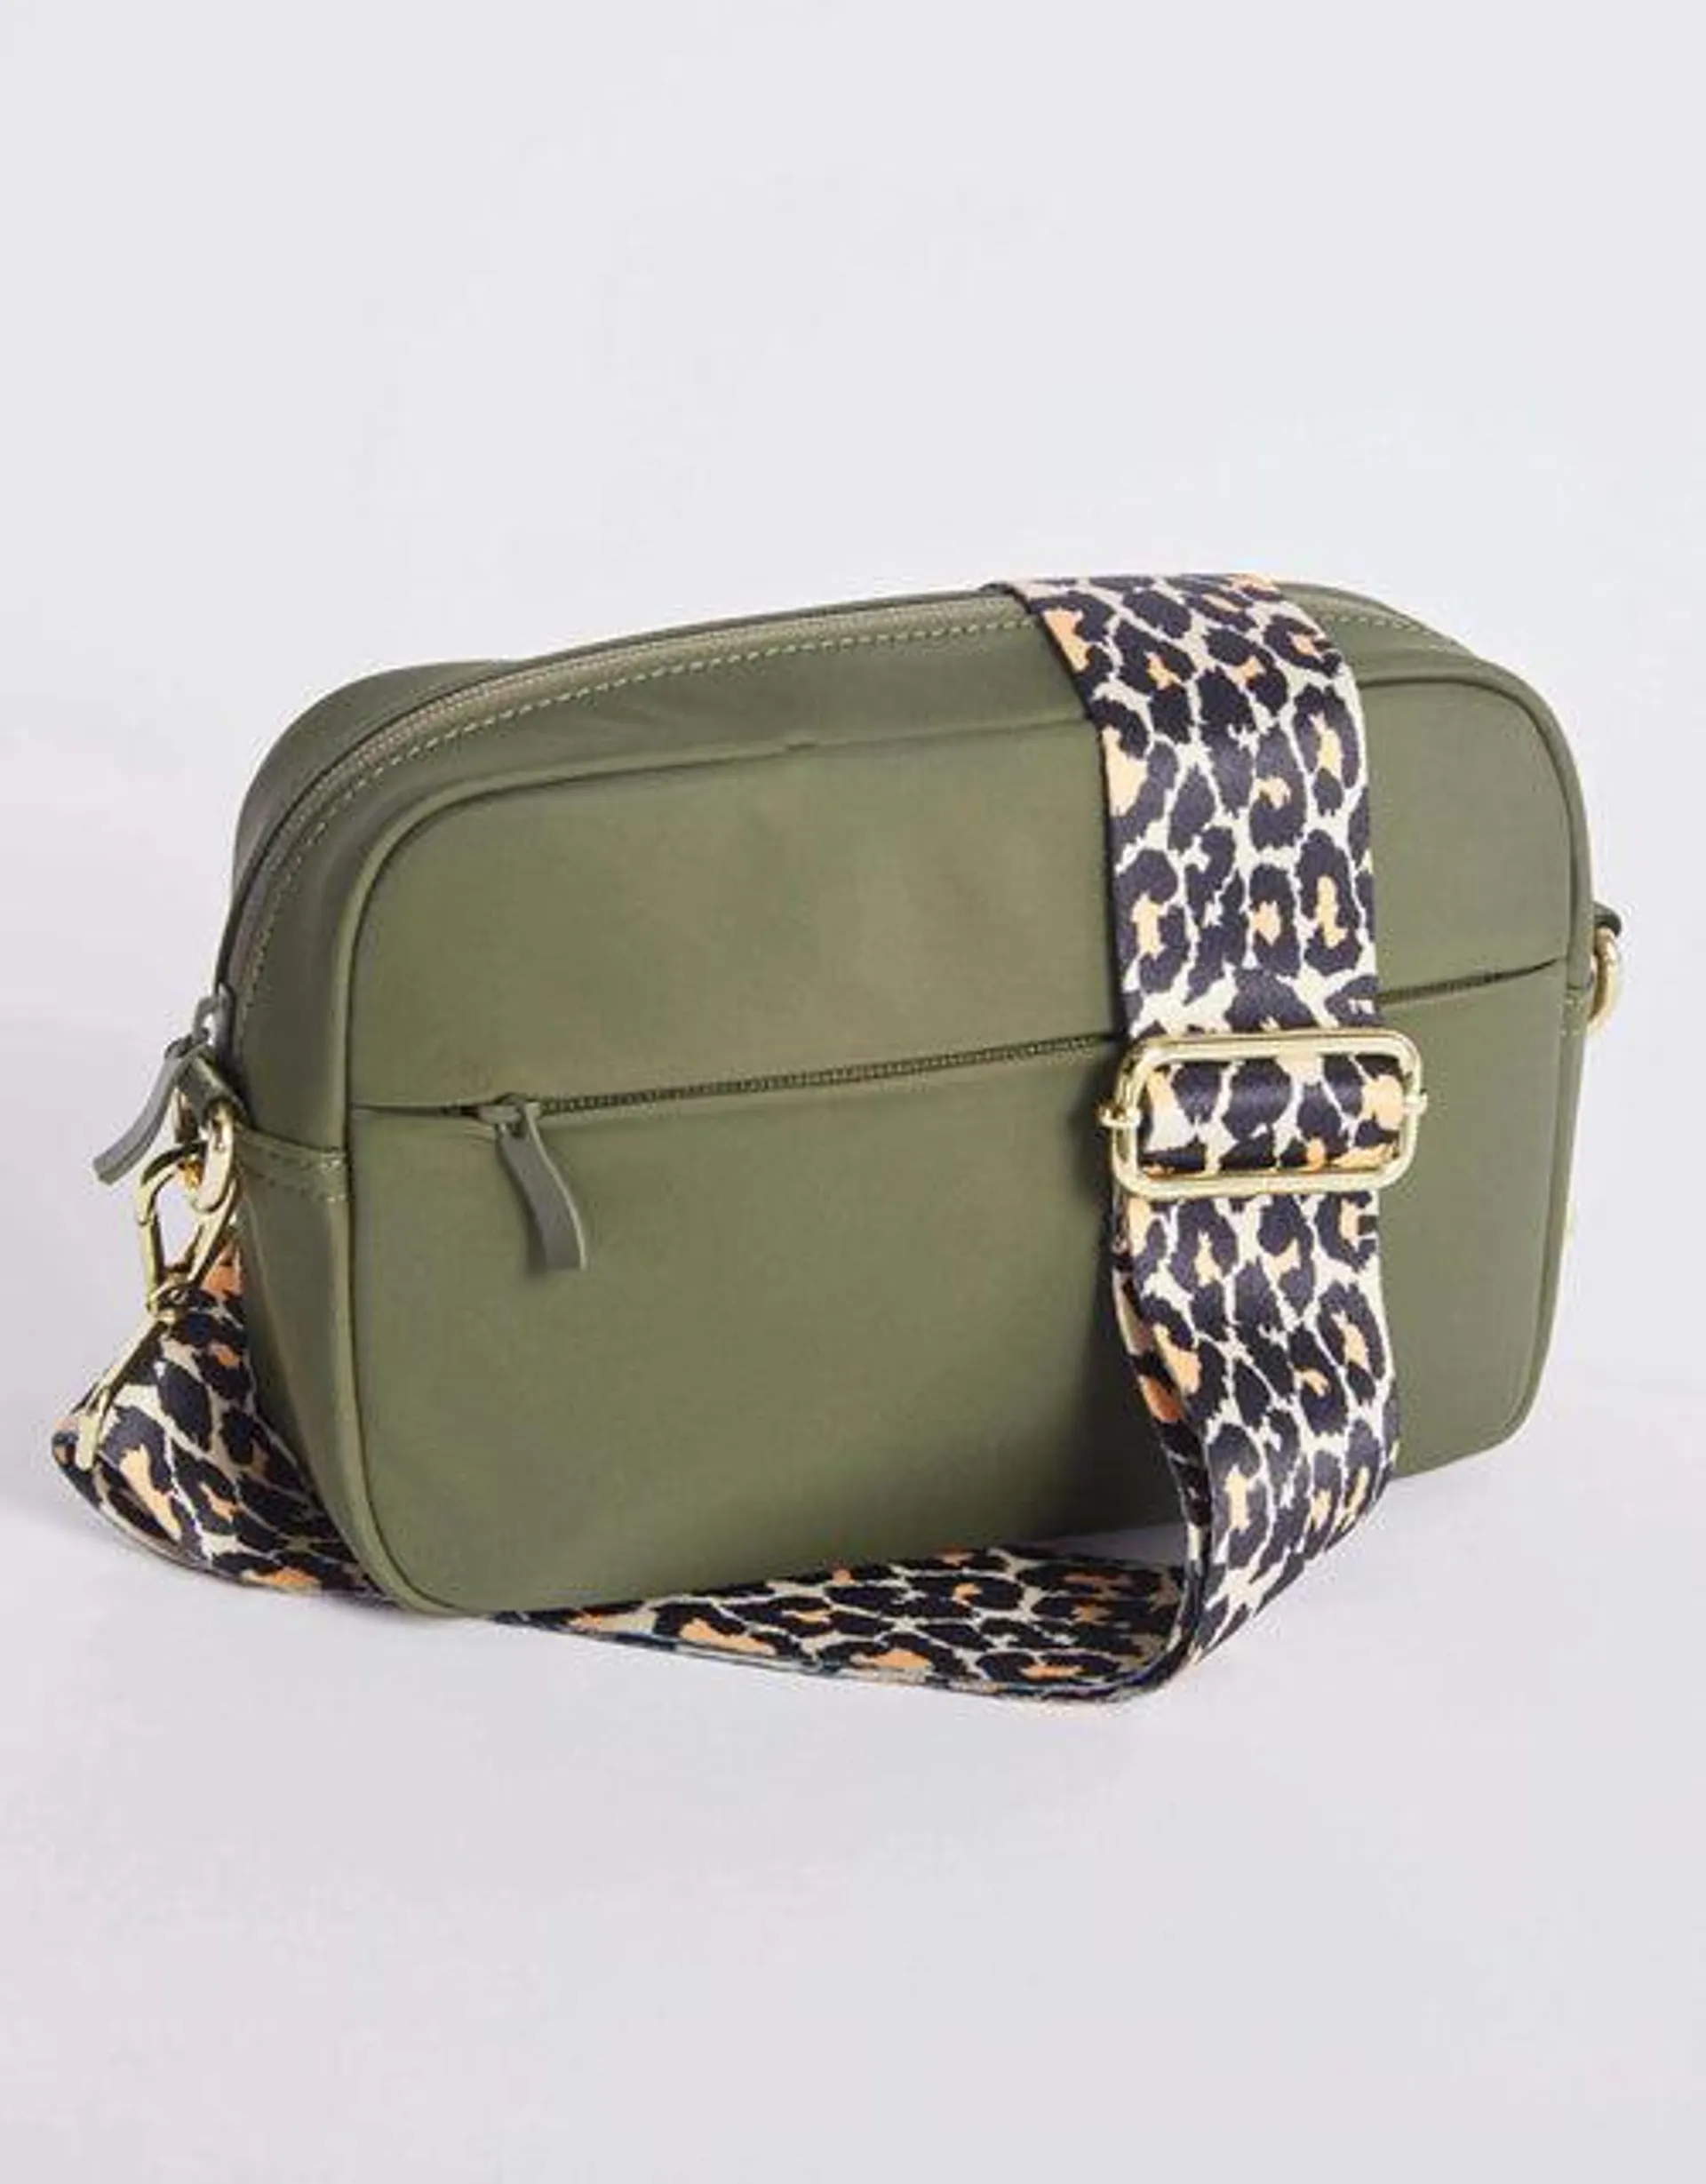 Off-Duty Crossbody Bag - Khaki/Tan Leopard